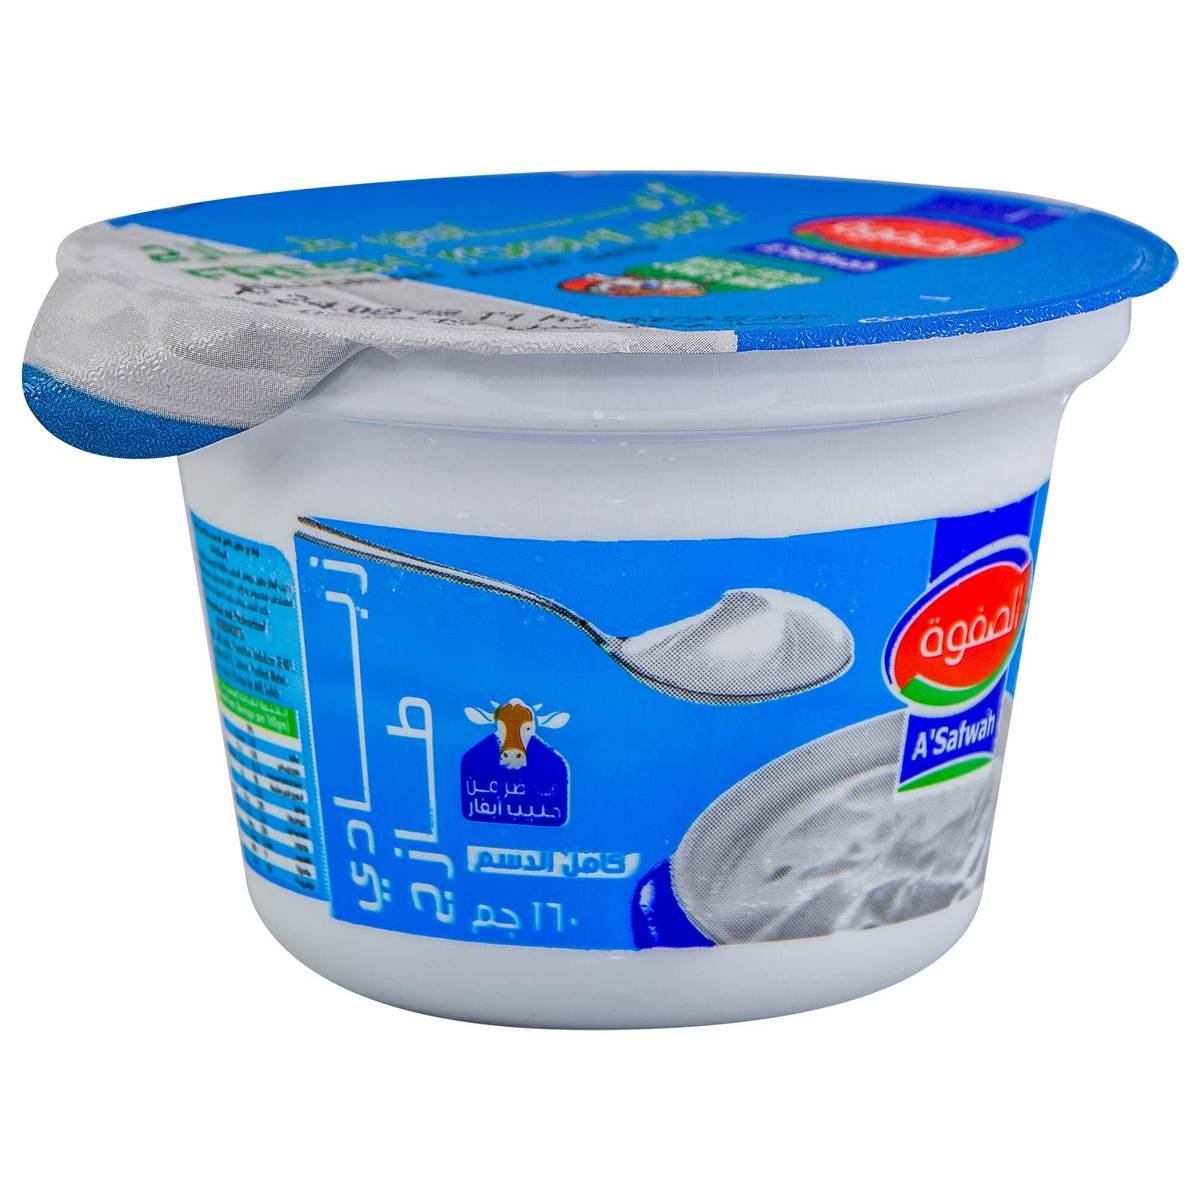 A'Safwah Fresh Yoghurt Full Cream 12 x 160g